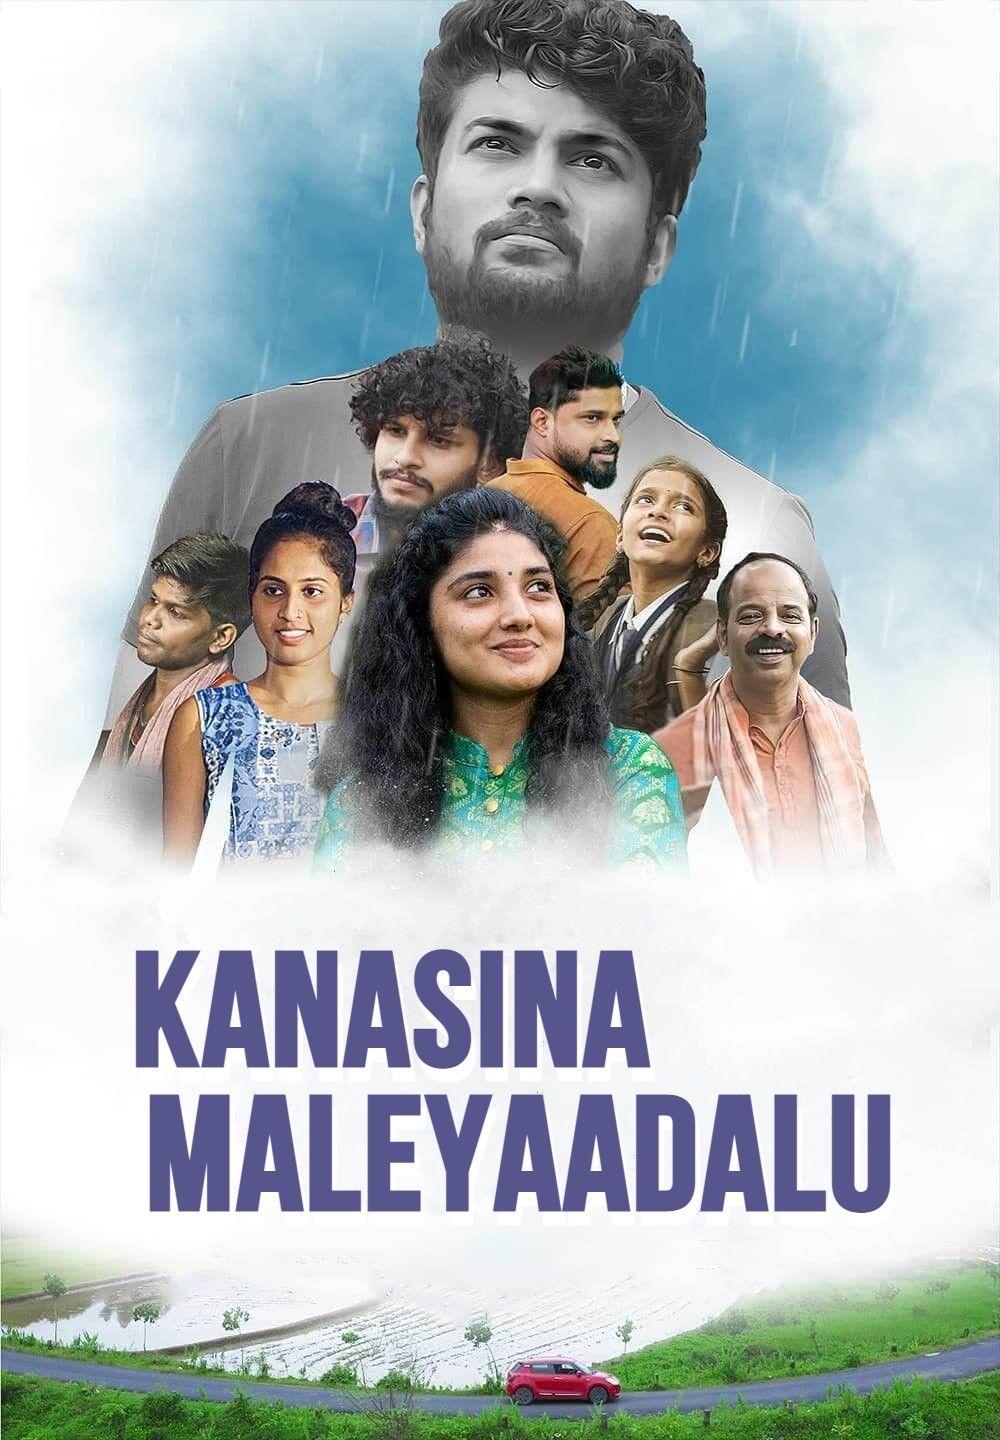 Kanasina Maleyaadalu (2022) Hindi Dubbed HDRip download full movie